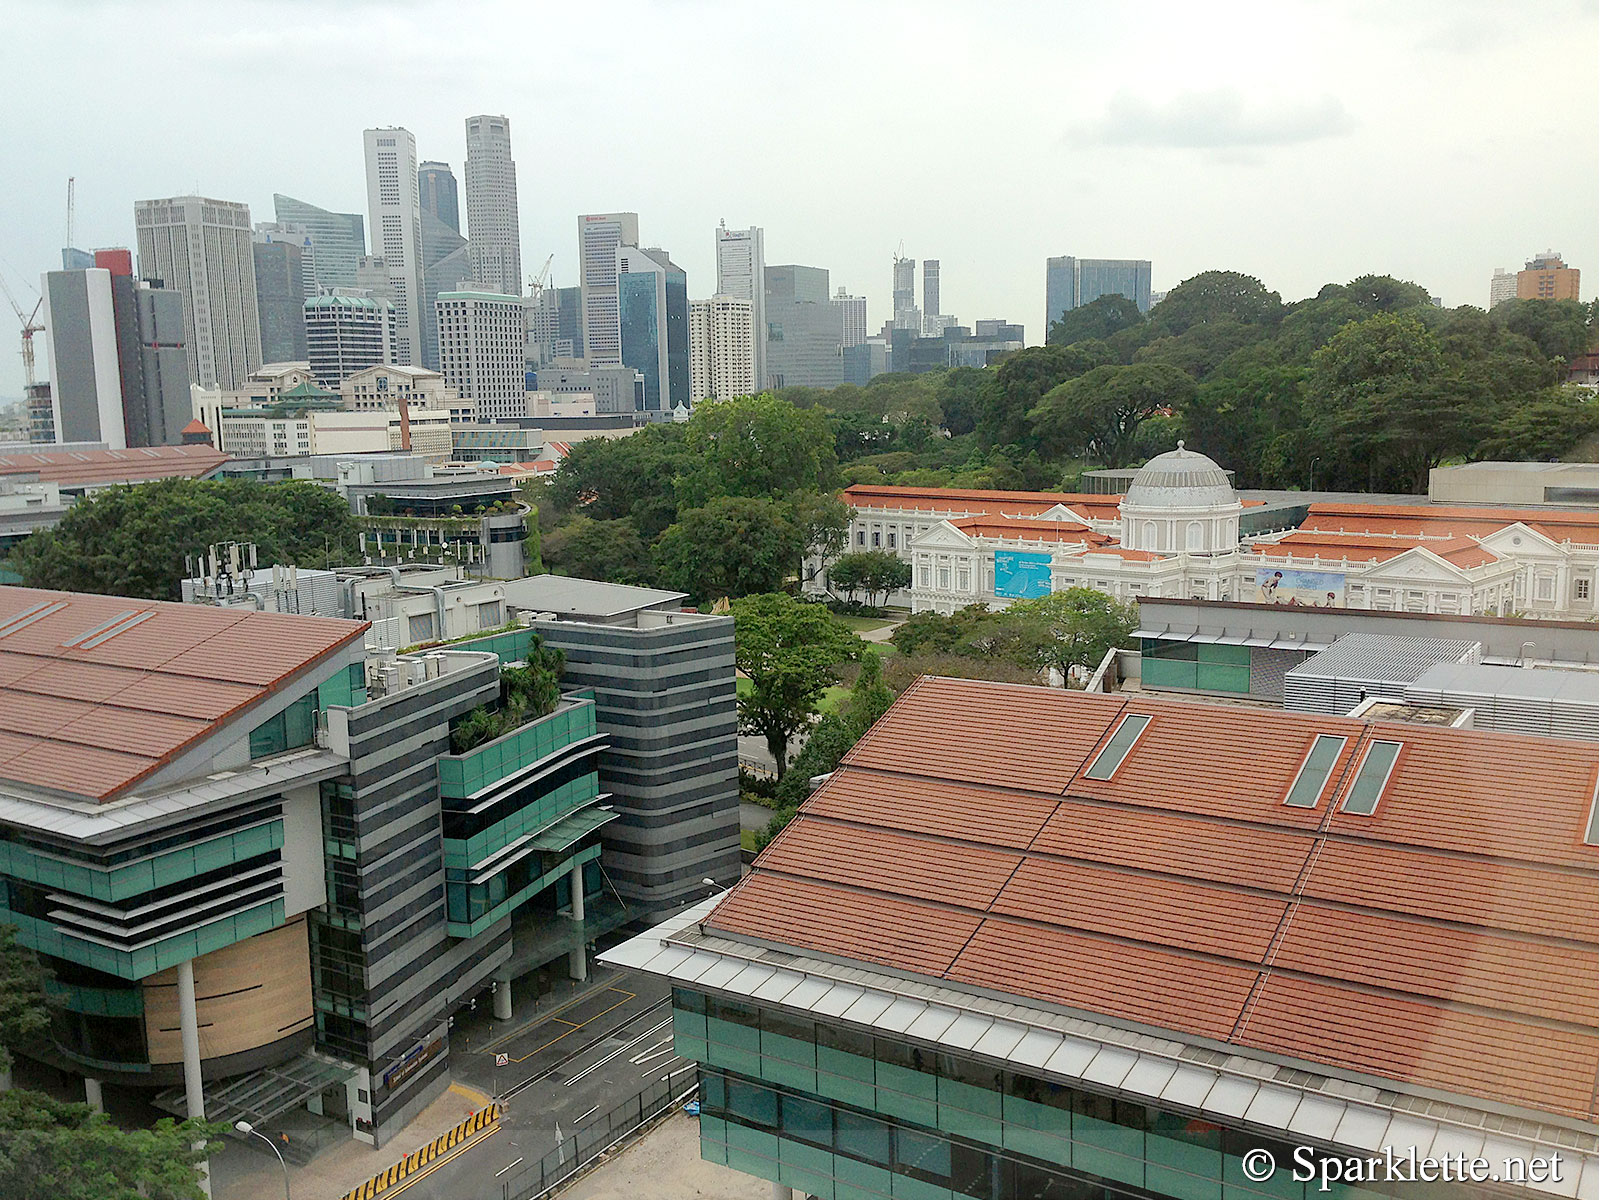 SMU and National Museum of Singapore